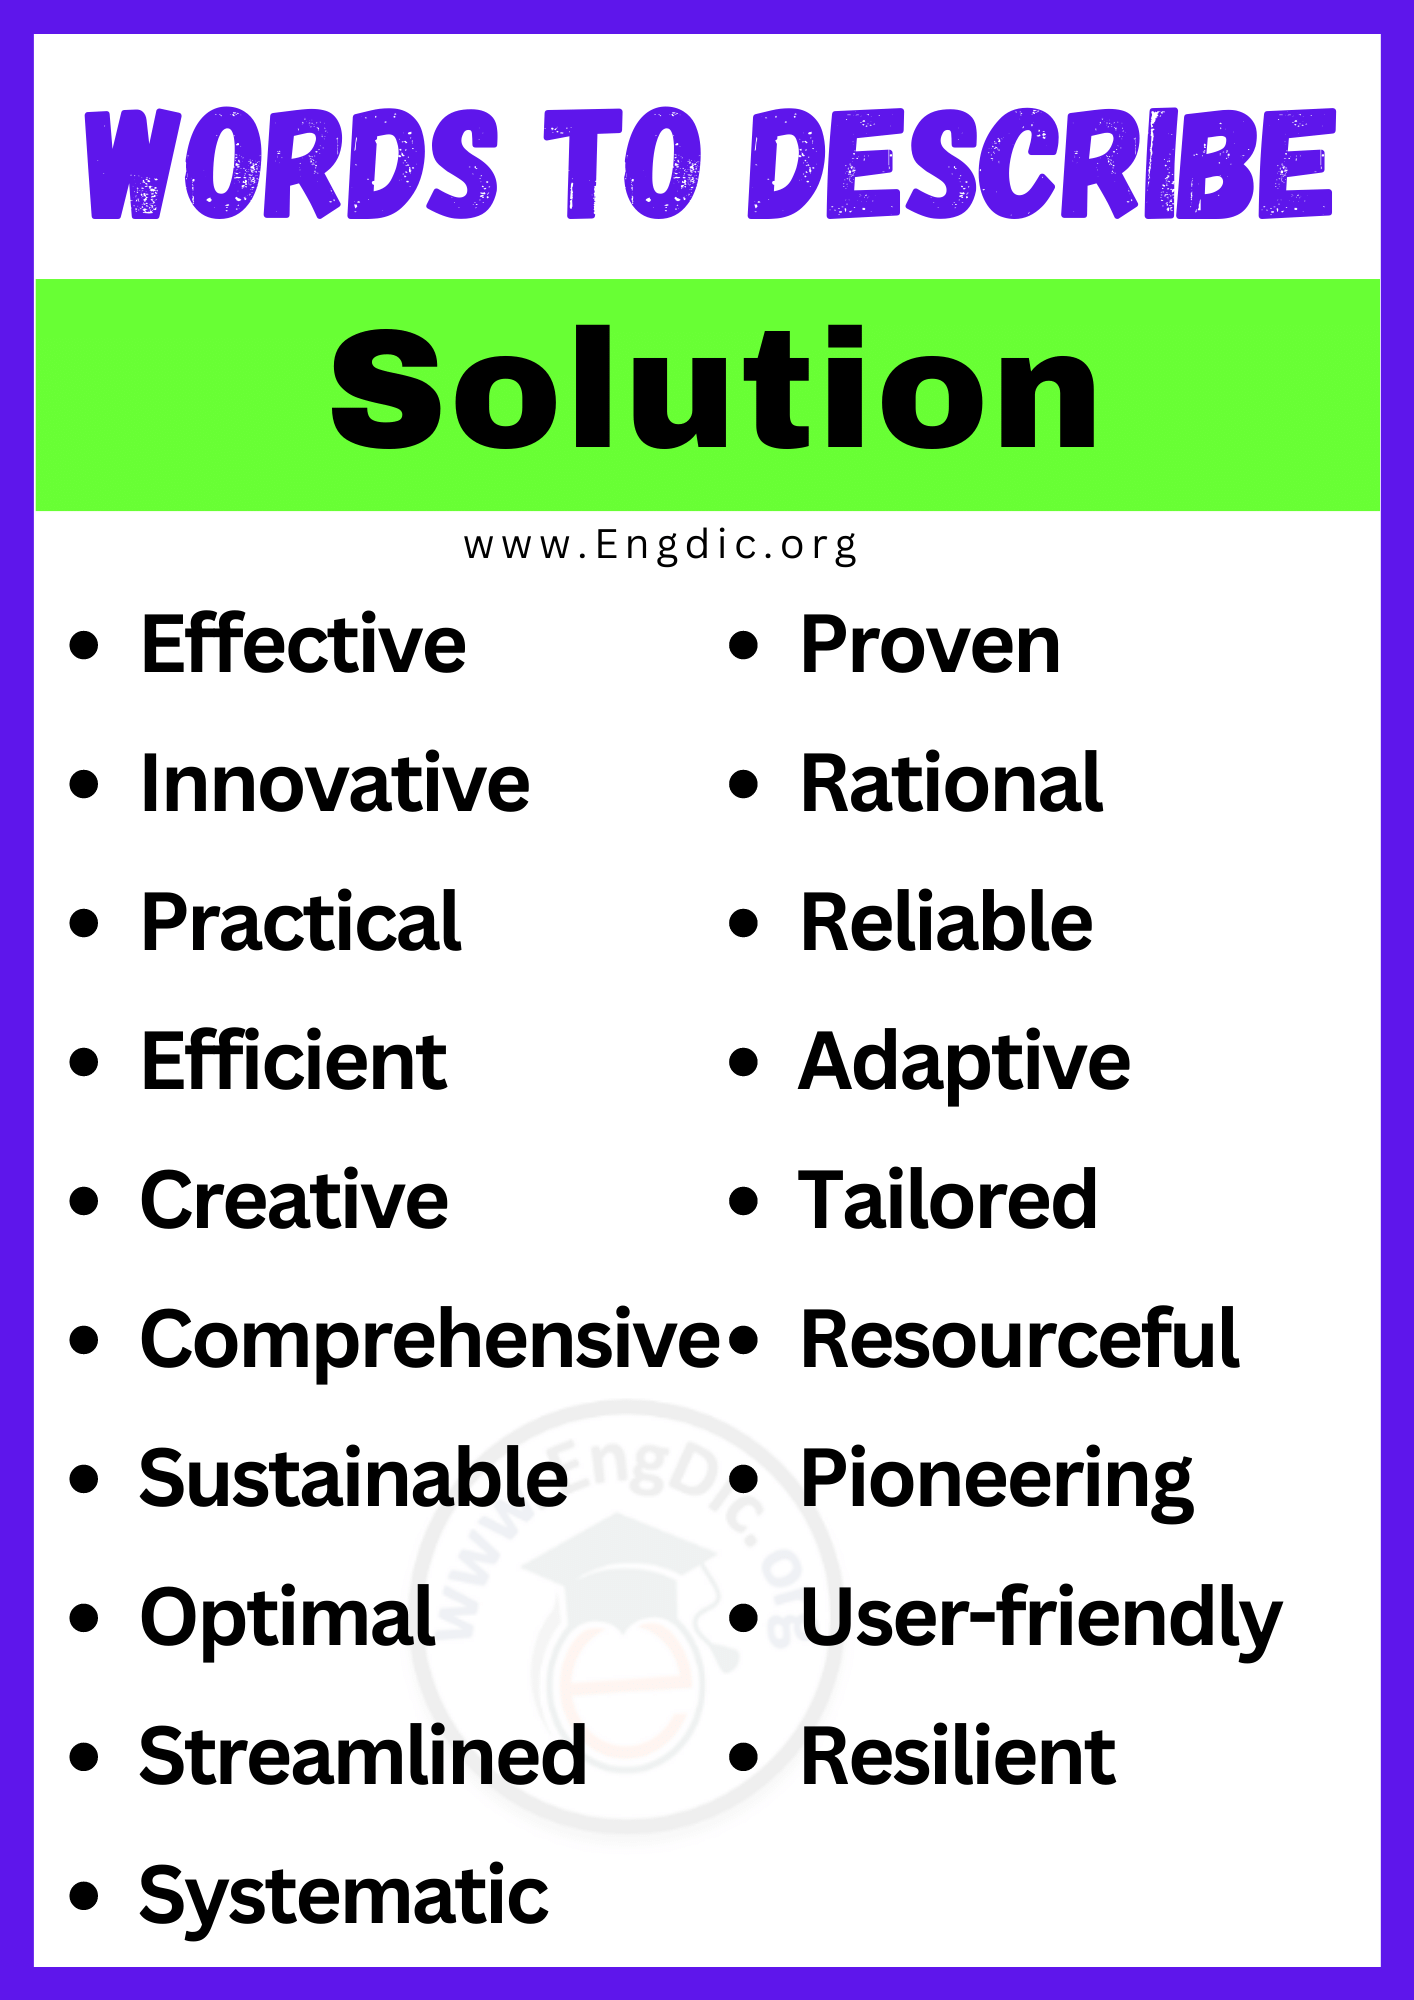 Words to Describe Solution